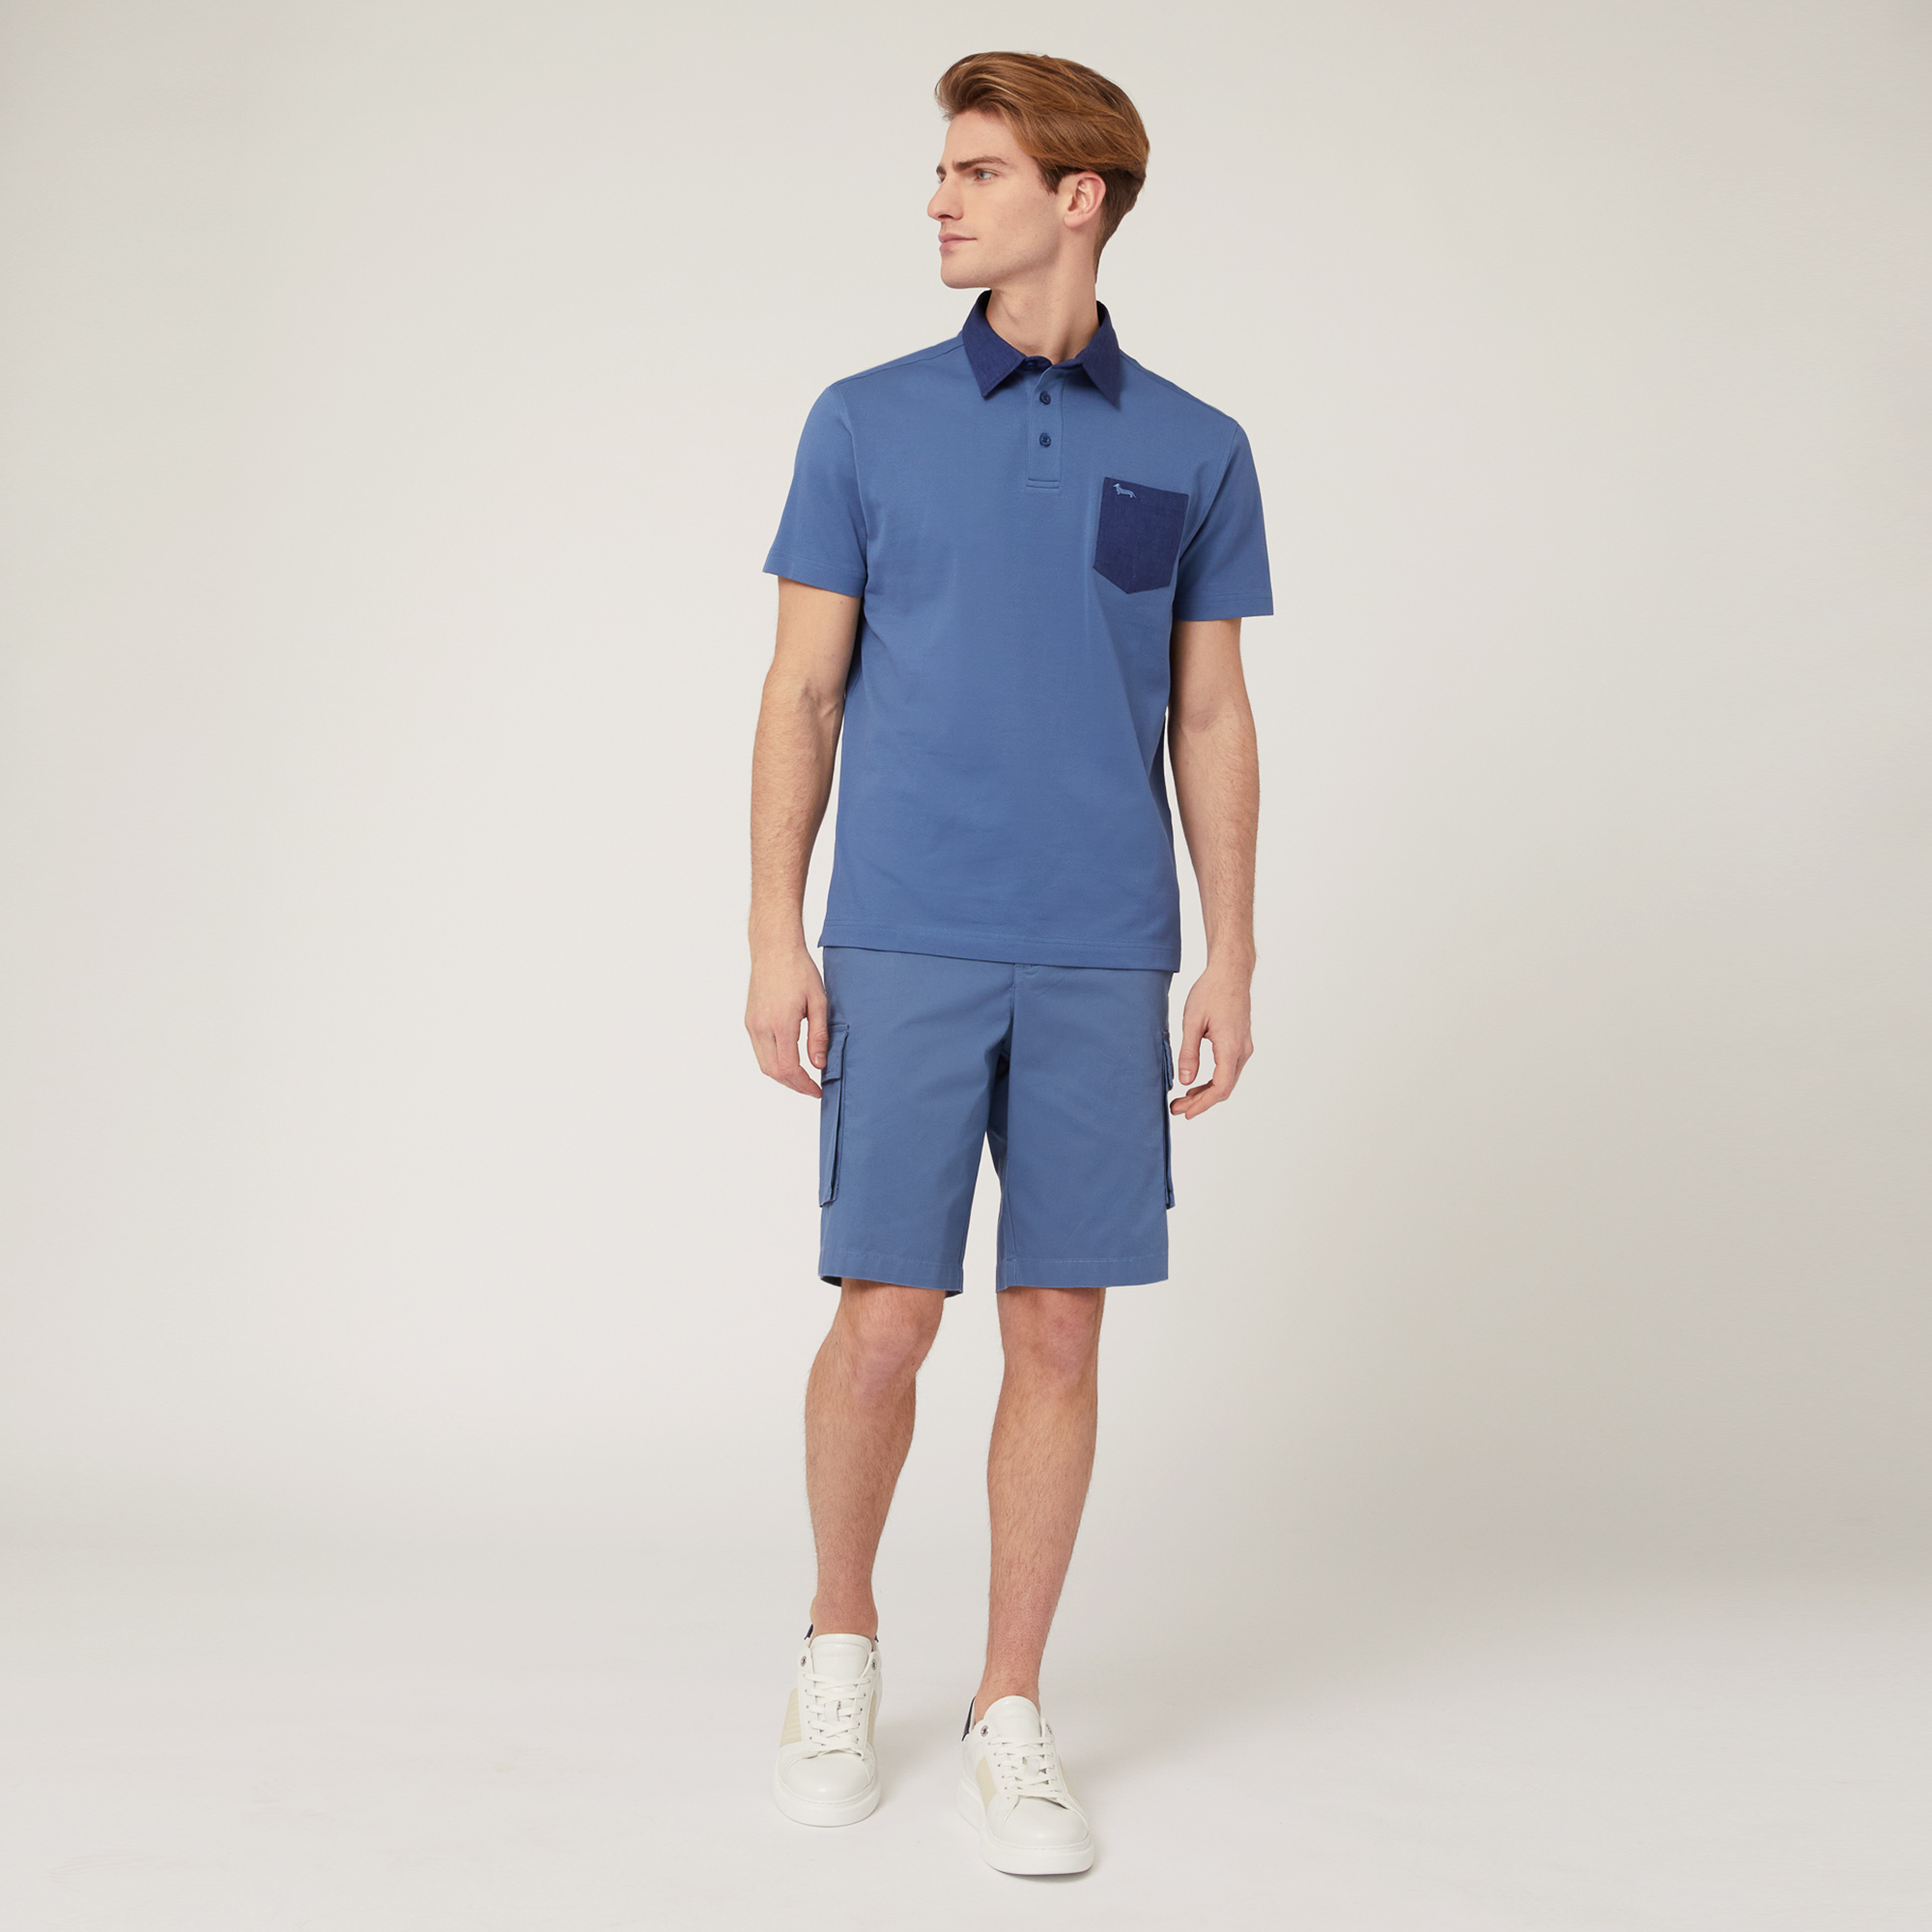 Poloshirt mit Brusttasche, Blau, large image number 3